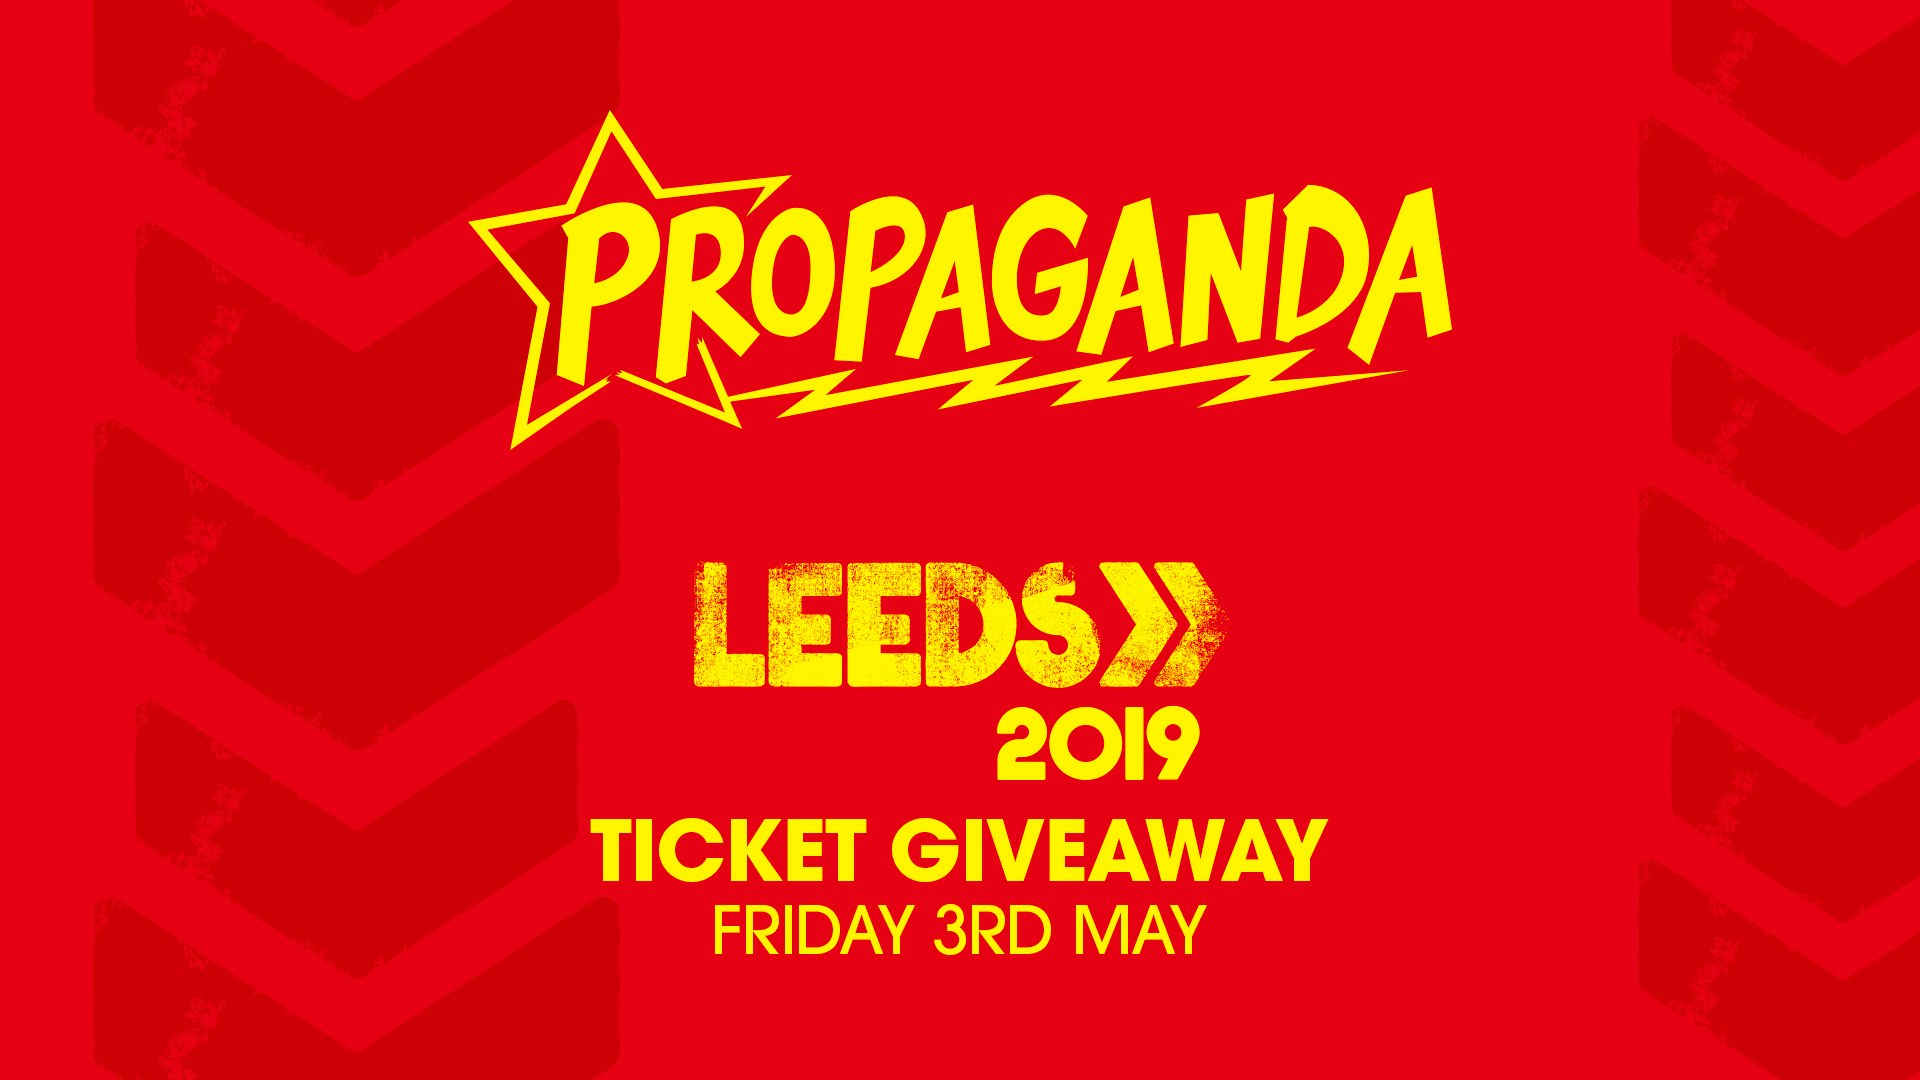 Propaganda Edinburgh – Leeds Festival Ticket Giveaway!